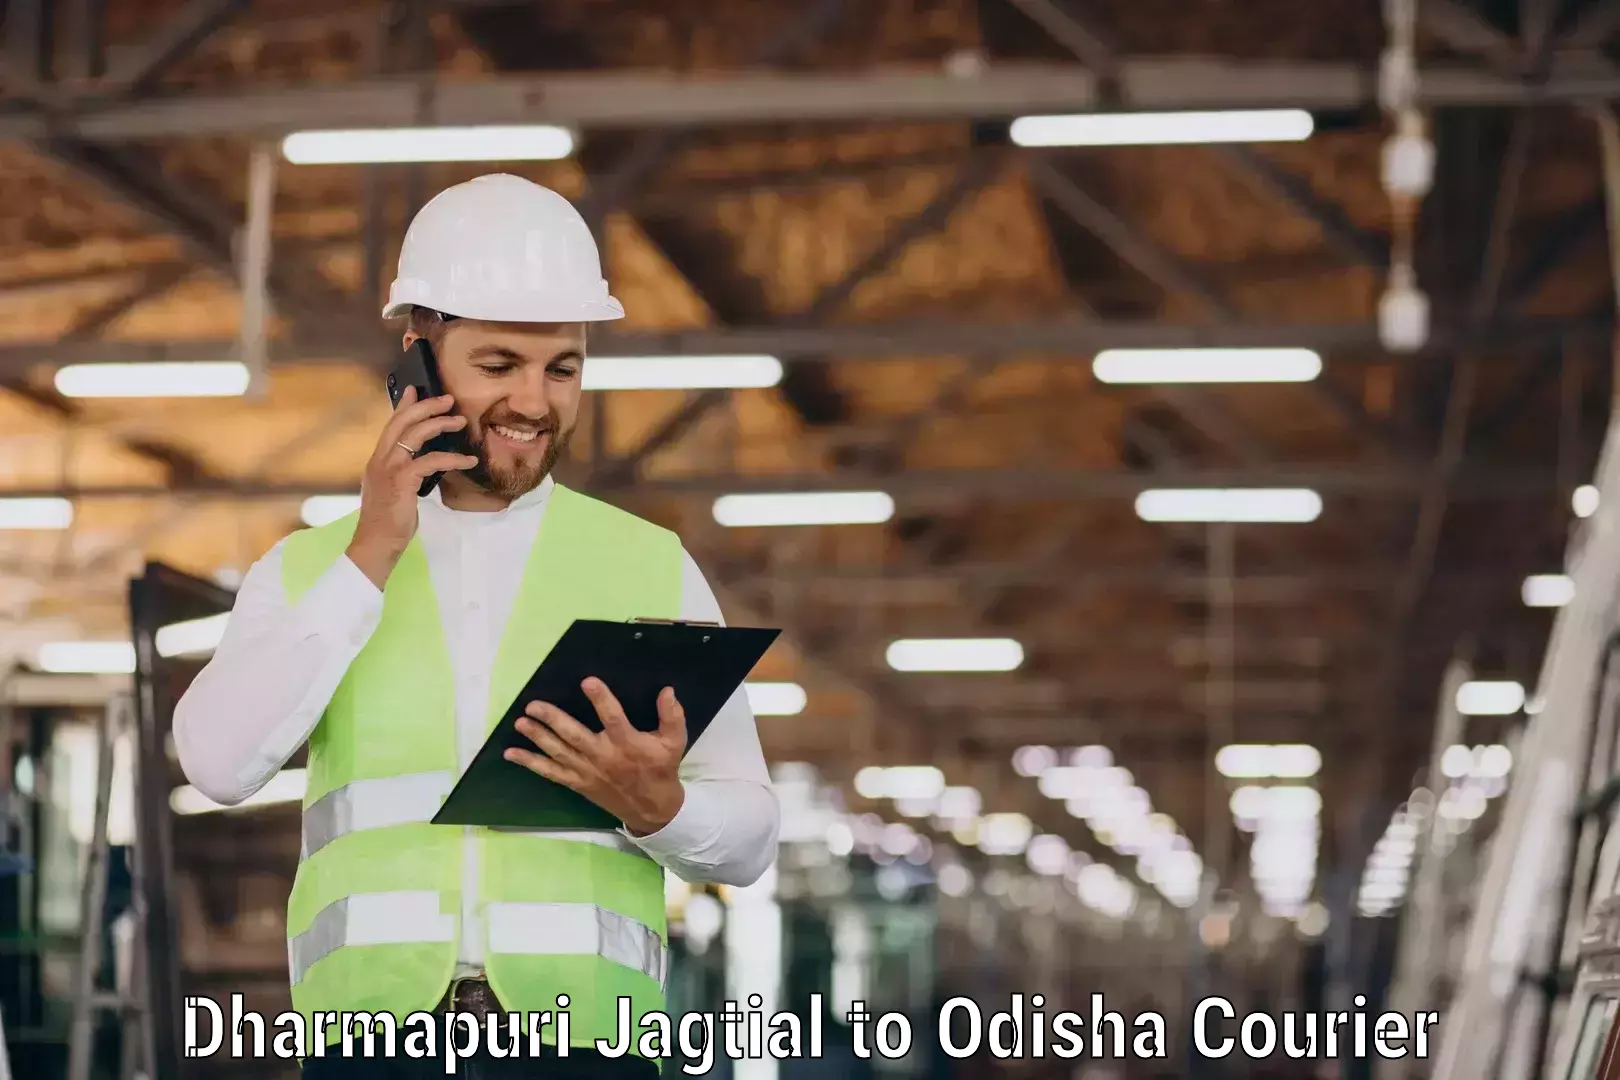 Efficient parcel service Dharmapuri Jagtial to Odisha